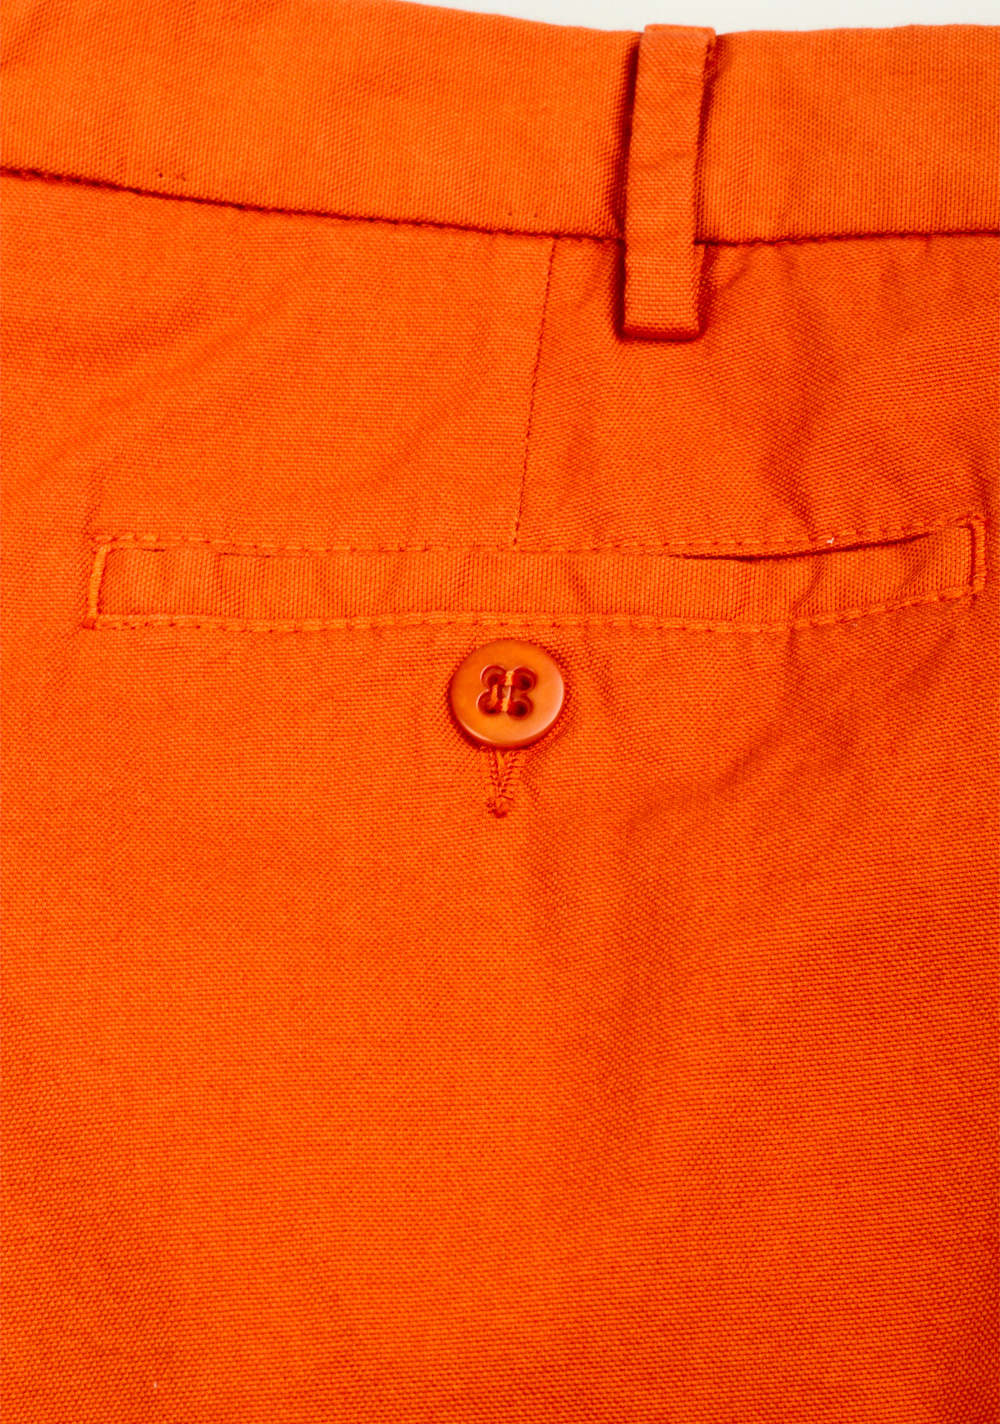 Caruso Orange Trousers Size 54 / 38 U.S. | Costume Limité